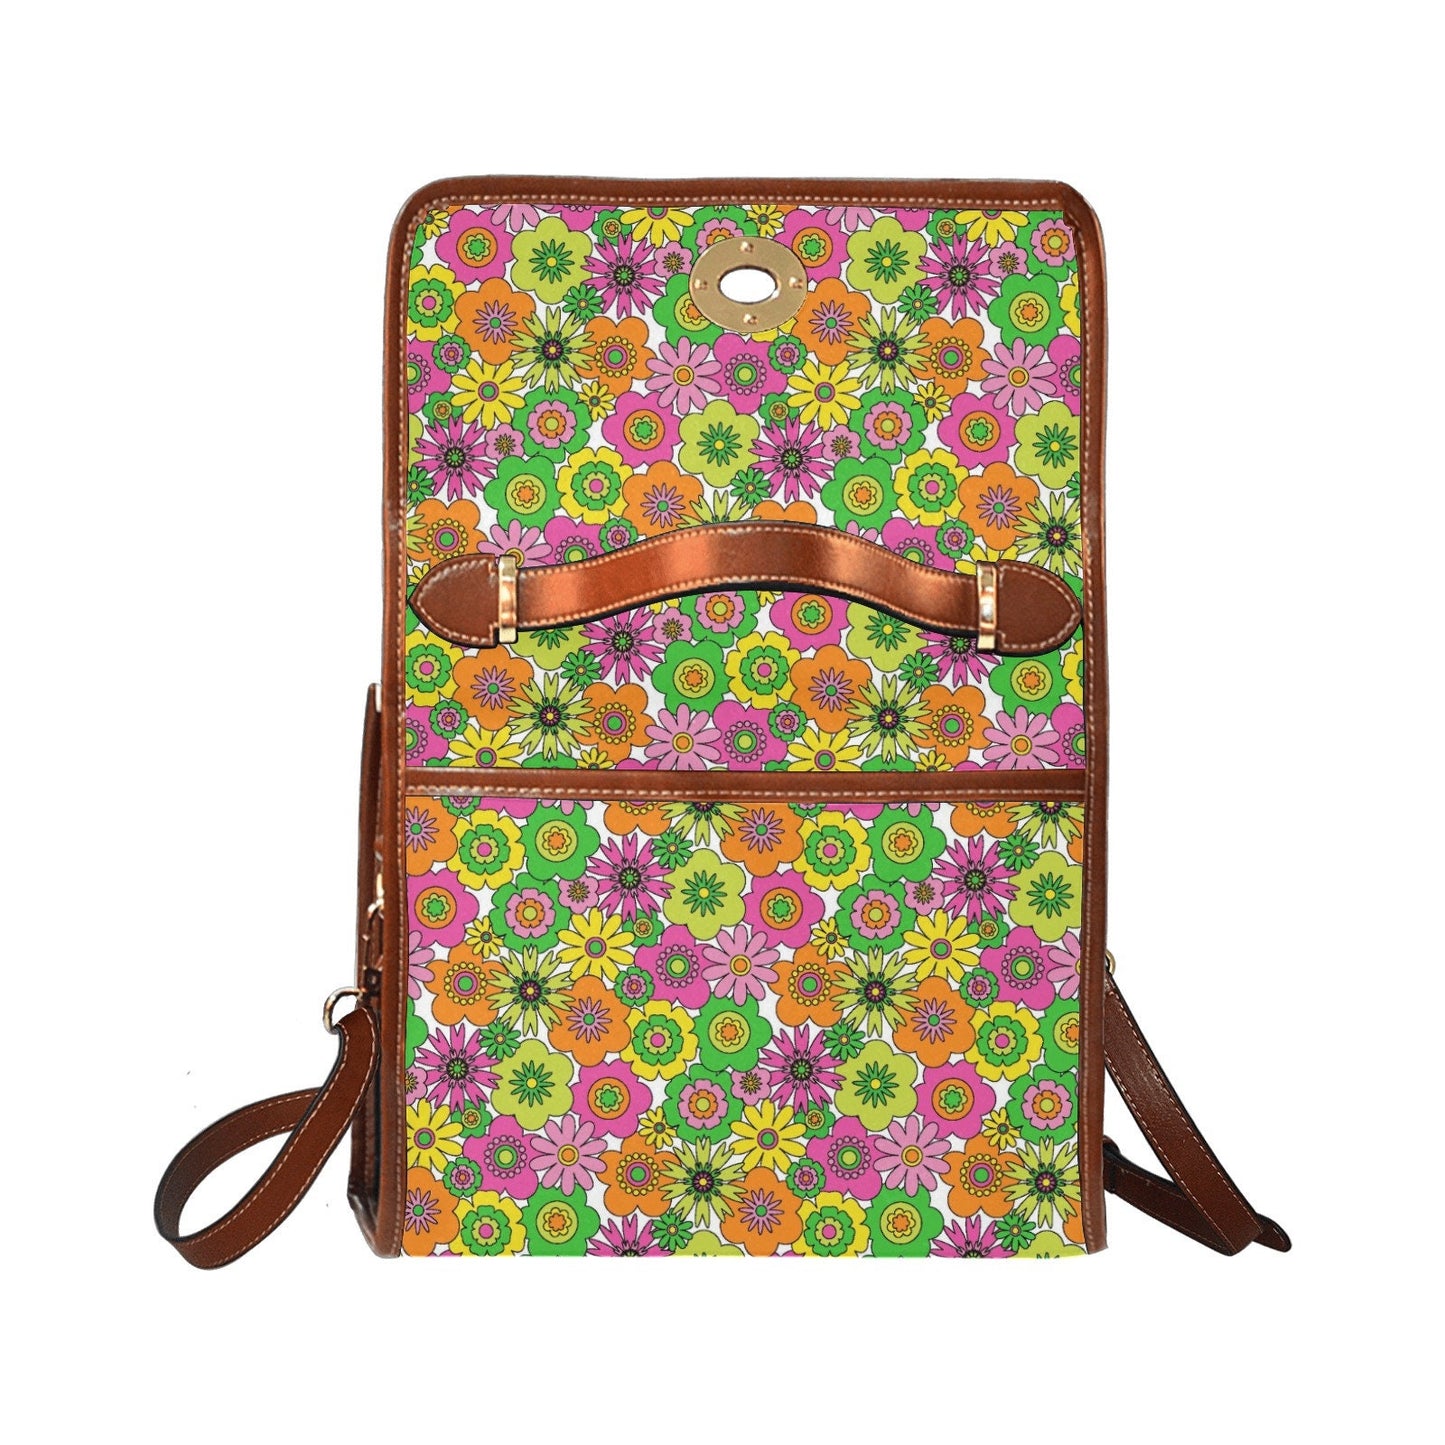 Women's Handbag, Retro Handbag, Women's Purse, 70s Style bag, 70s Style purse, Floral Handbag, Neon Bag, 70s inspired, 60s style purse